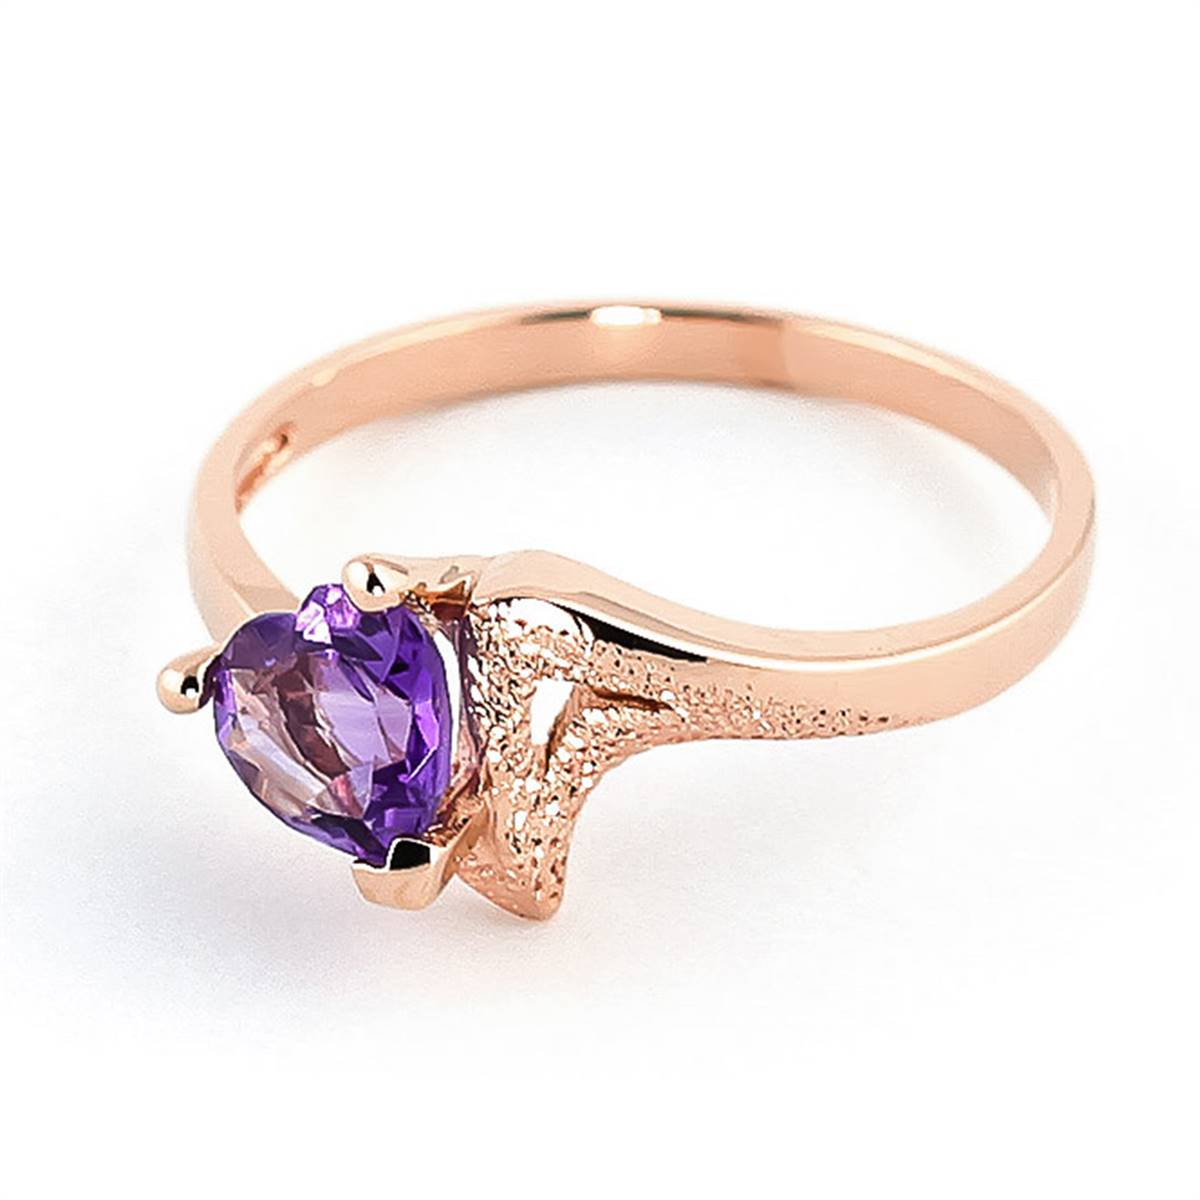 0.75 Carat 14K Solid Rose Gold Ring Natural Purple Amethyst